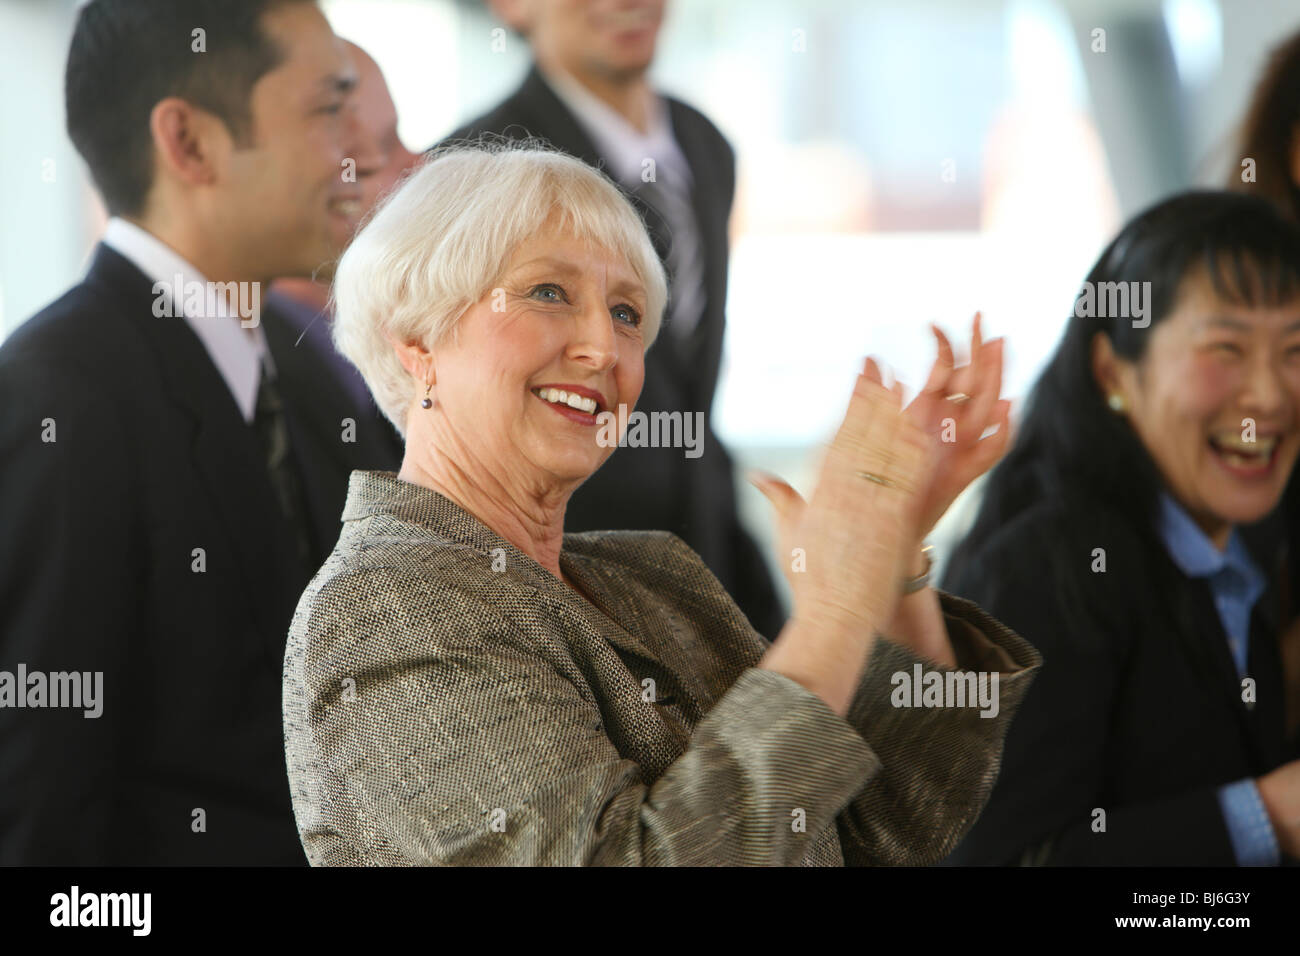 Happy businesspeople celebrating Stock Photo